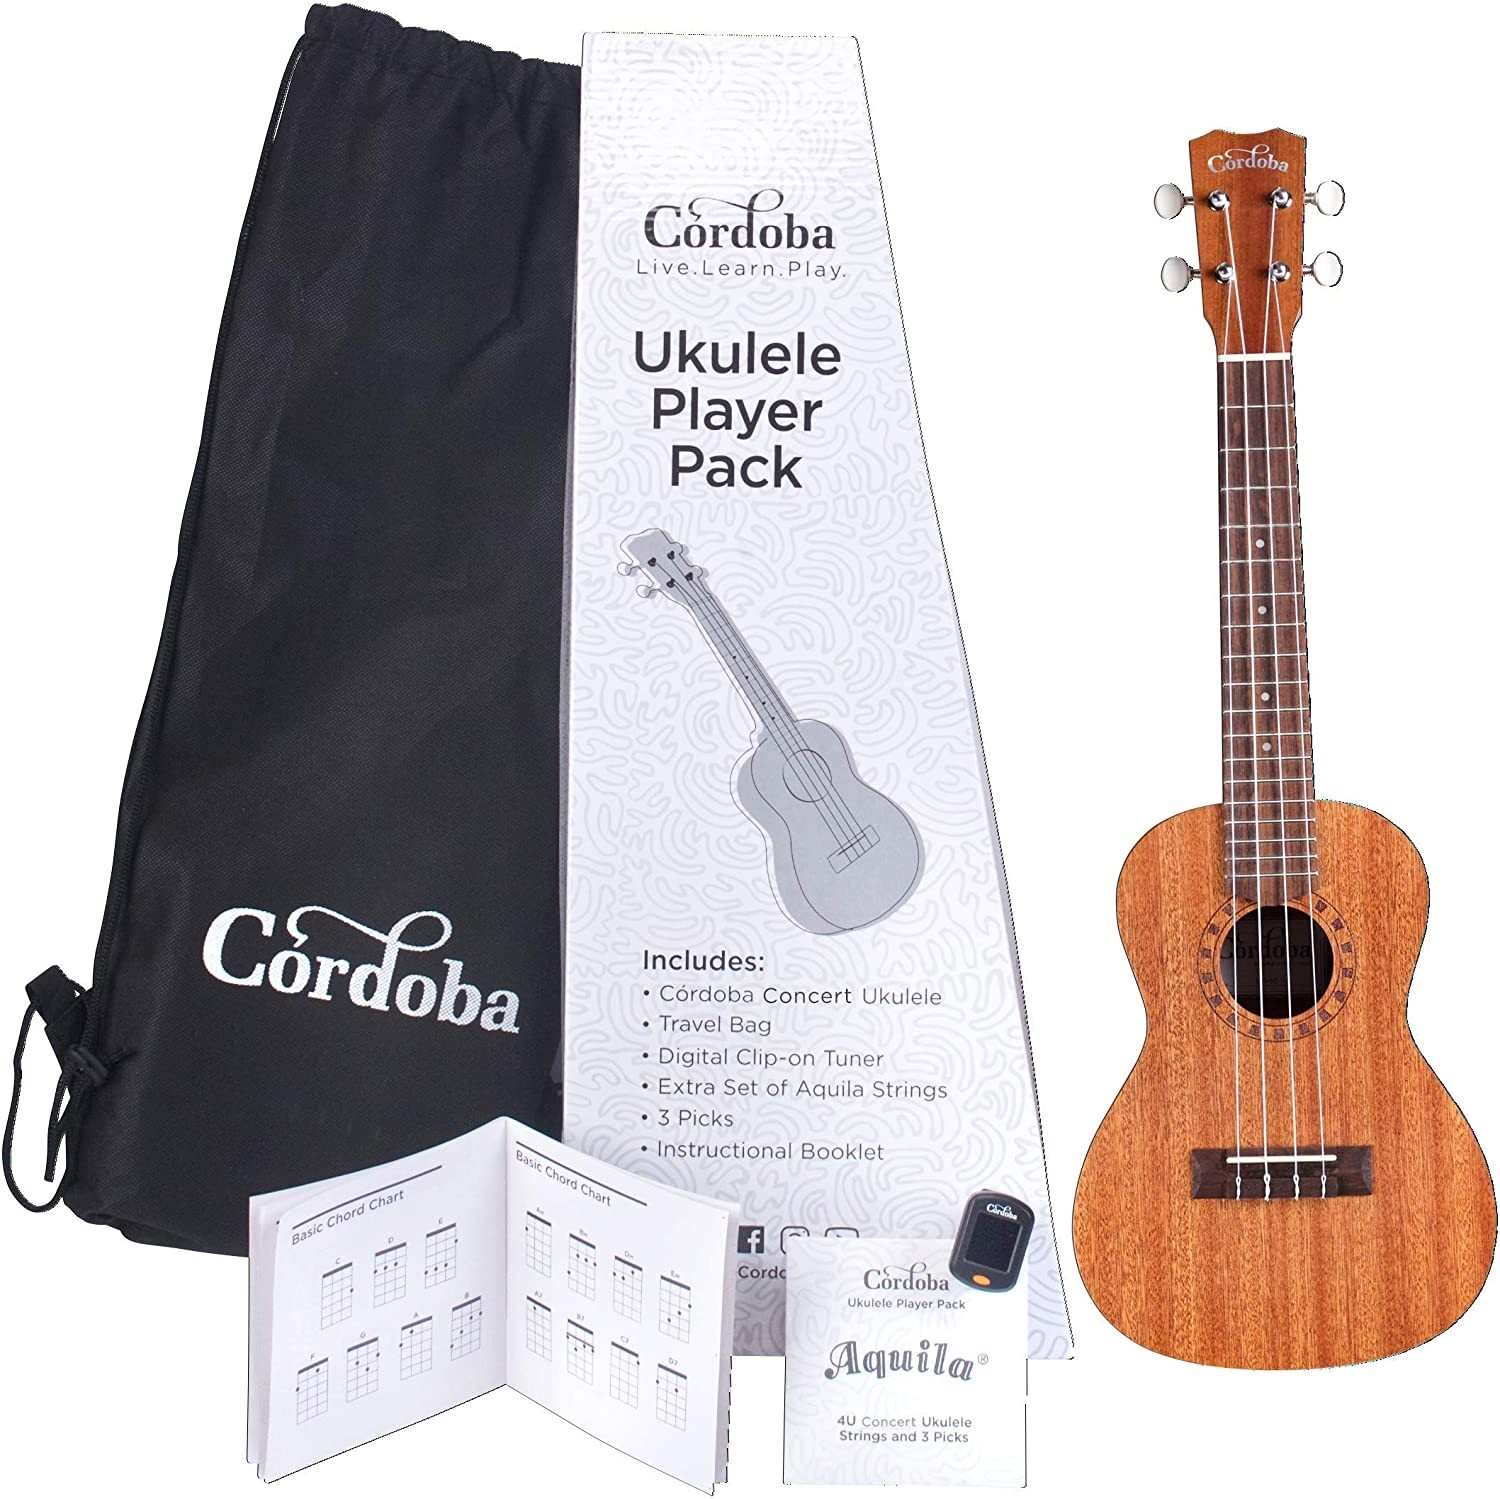 Cordoba Concert ukulele Player pack w/ drawstring bag, tuner & book